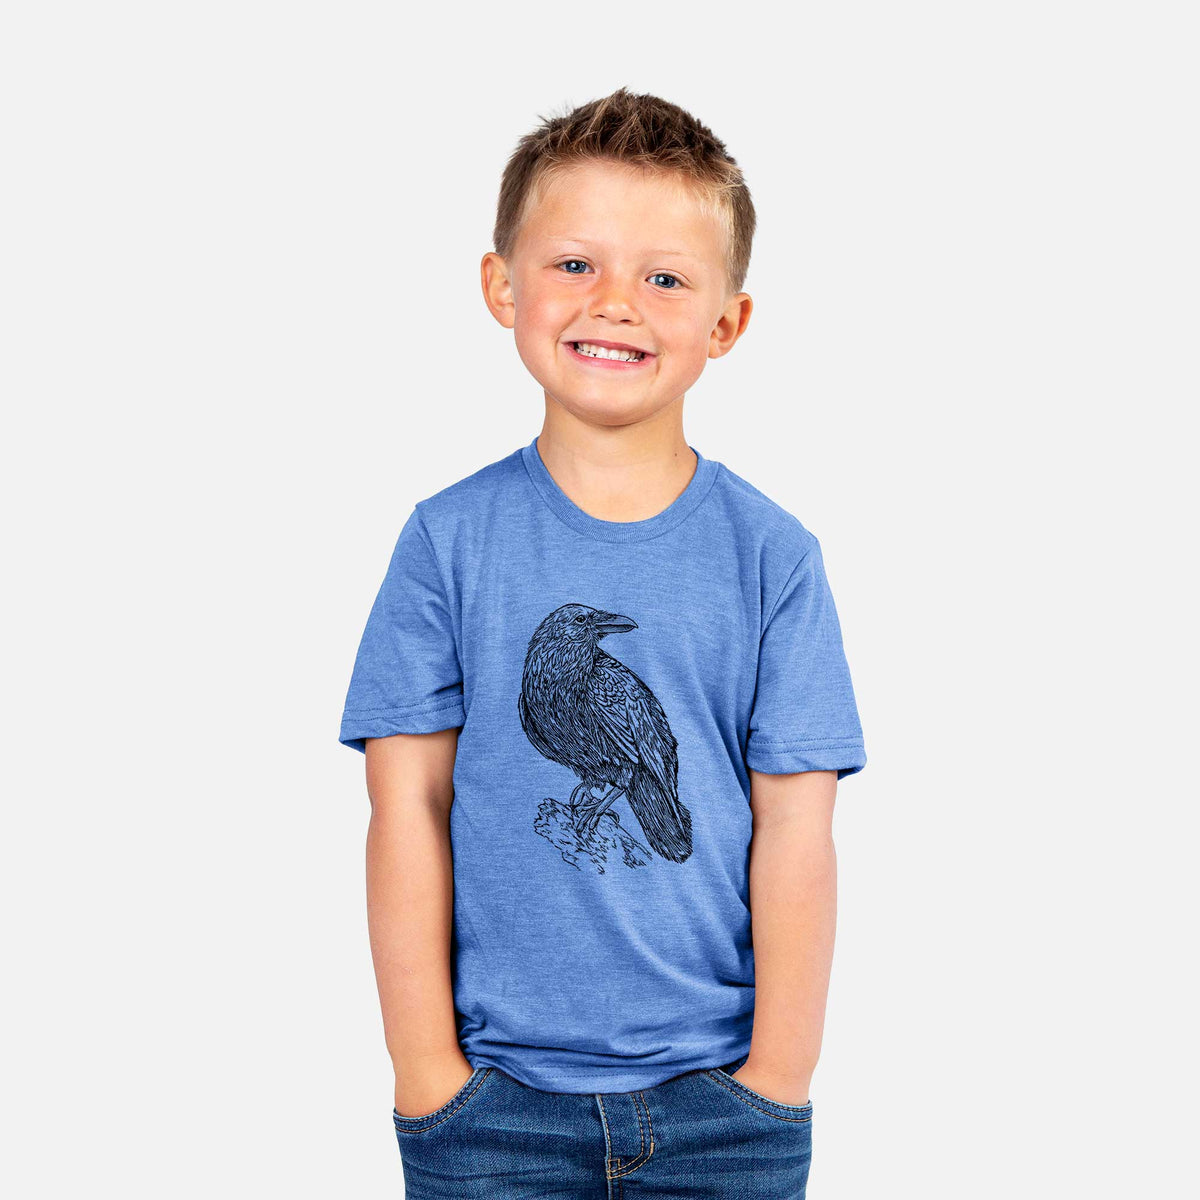 Corvus corax - Common Raven - Kids Shirt